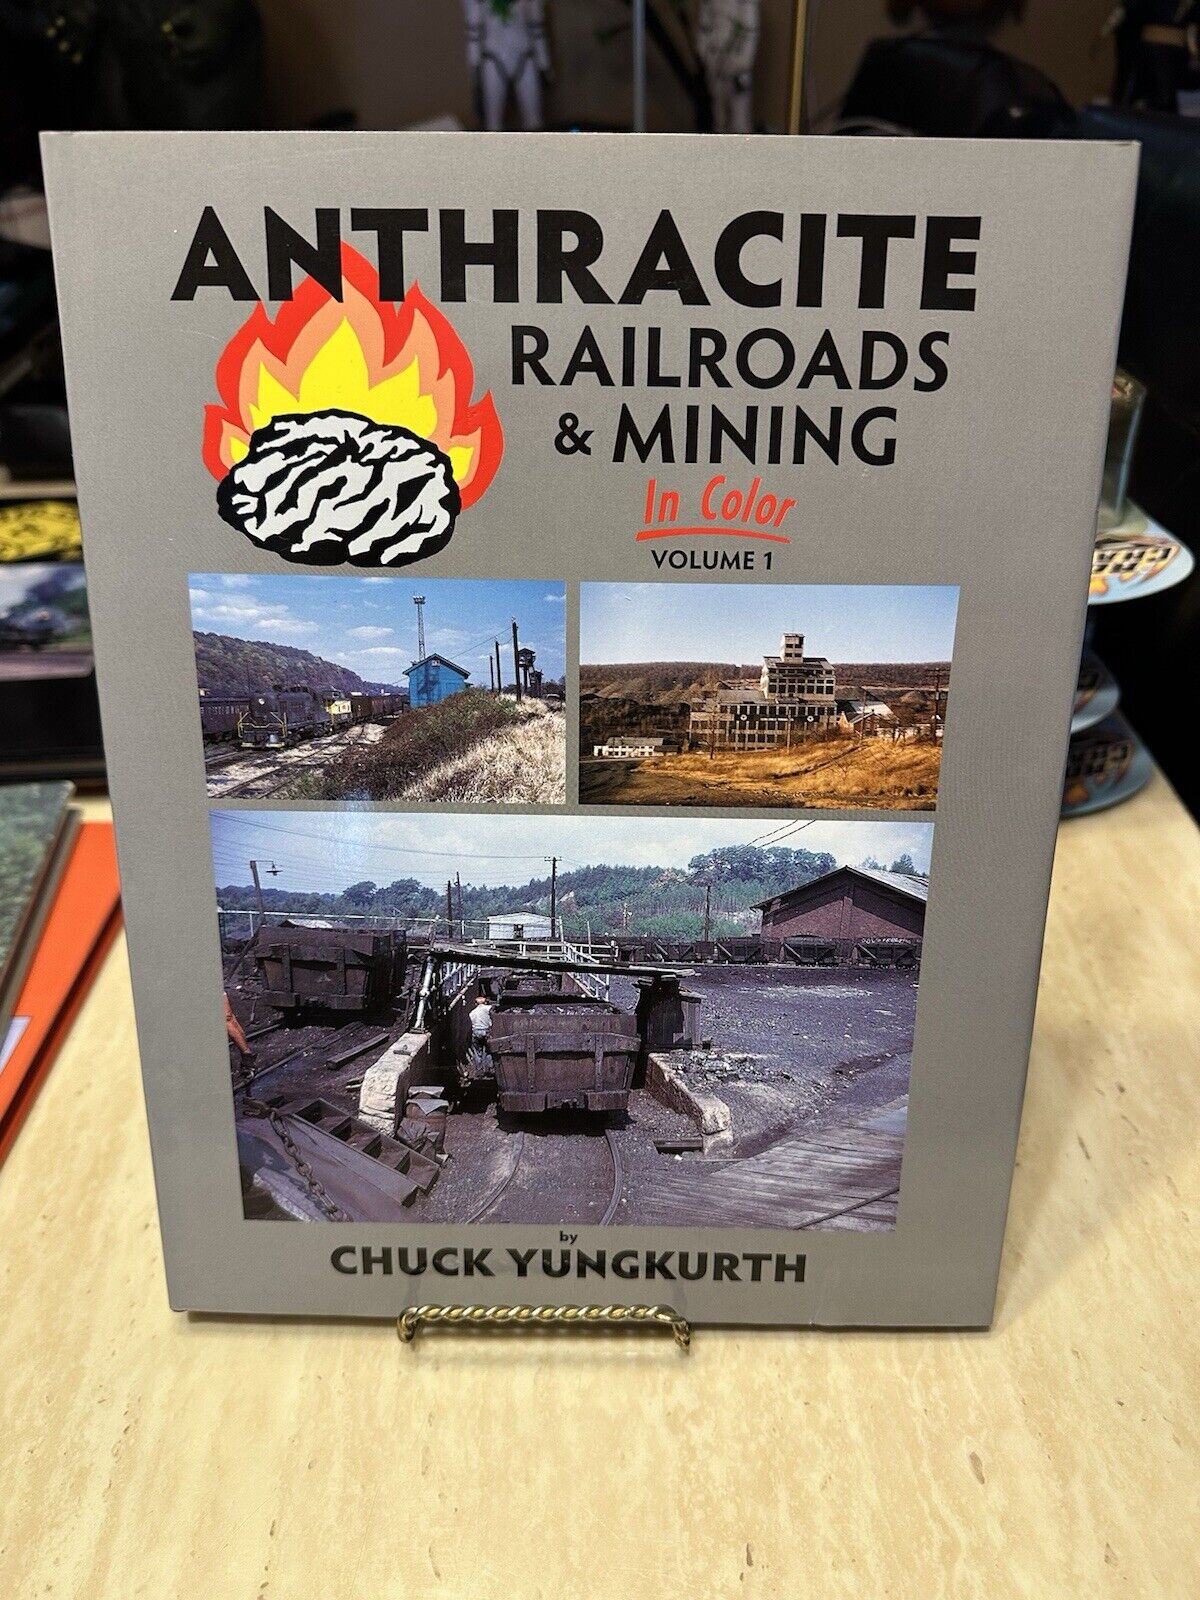 Morning Sun: Anthracite Railroads & Mining Volume 1 by Chuck Yungkurth ©2010 HC 